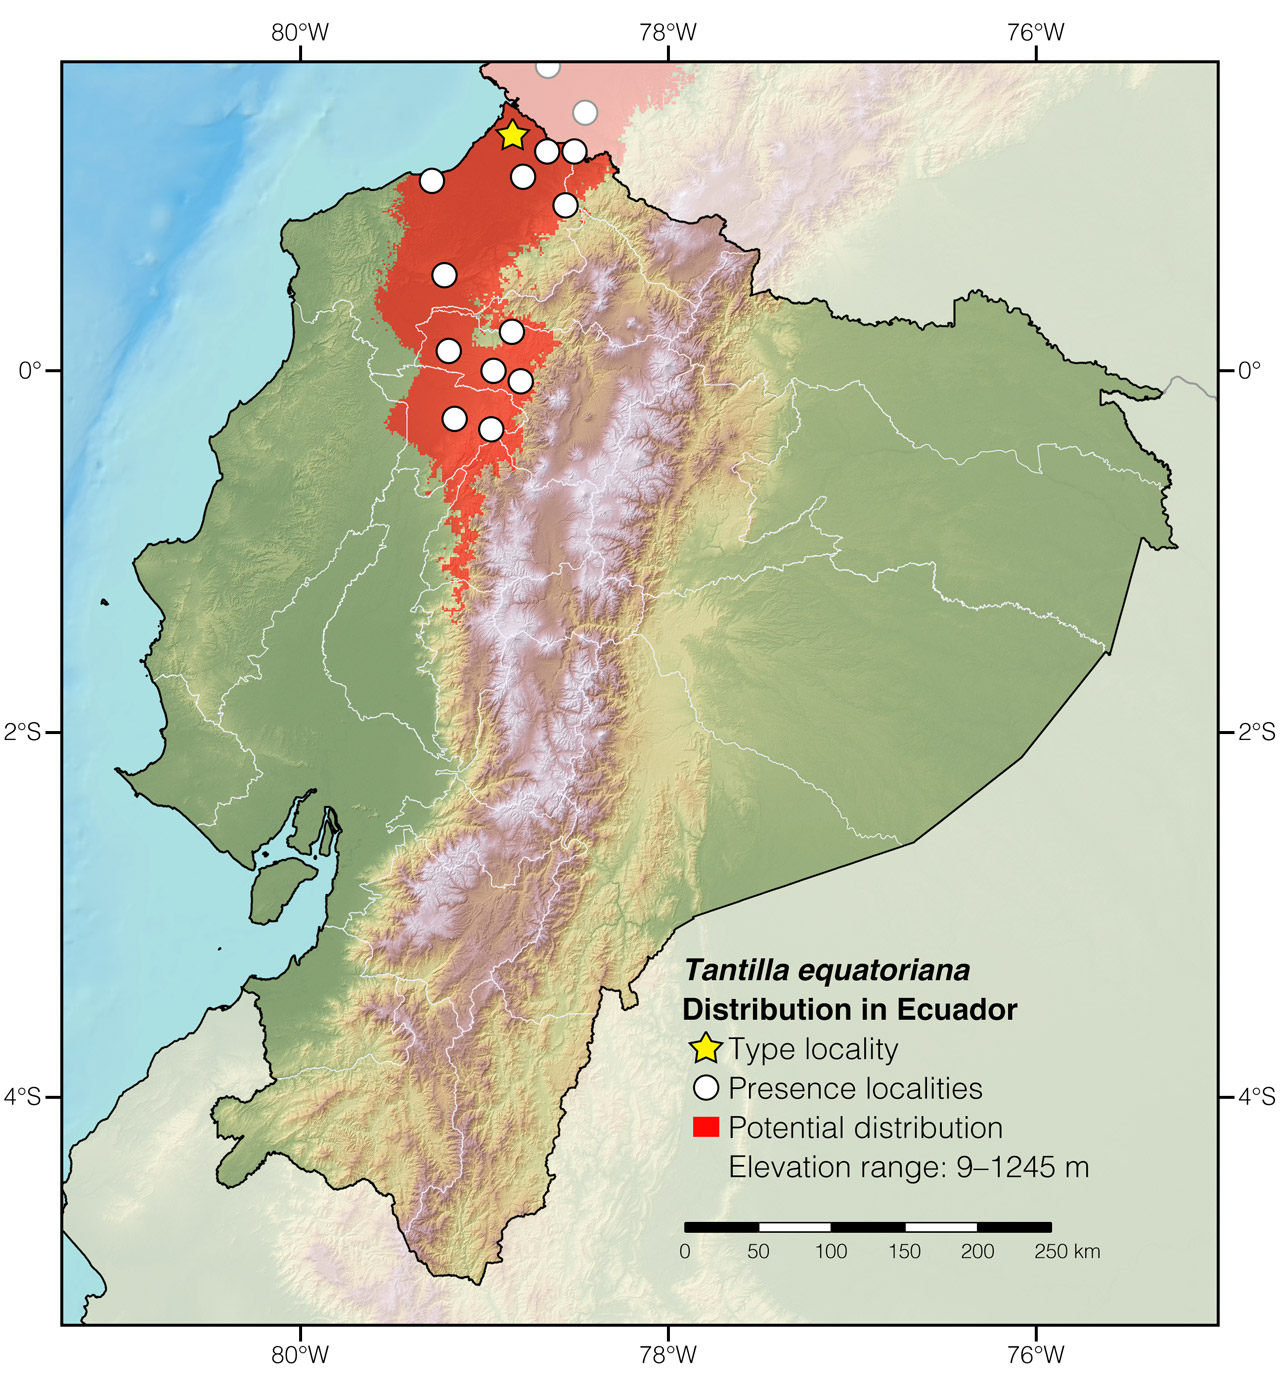 Distribution of Tantilla equatoriana in Ecuador